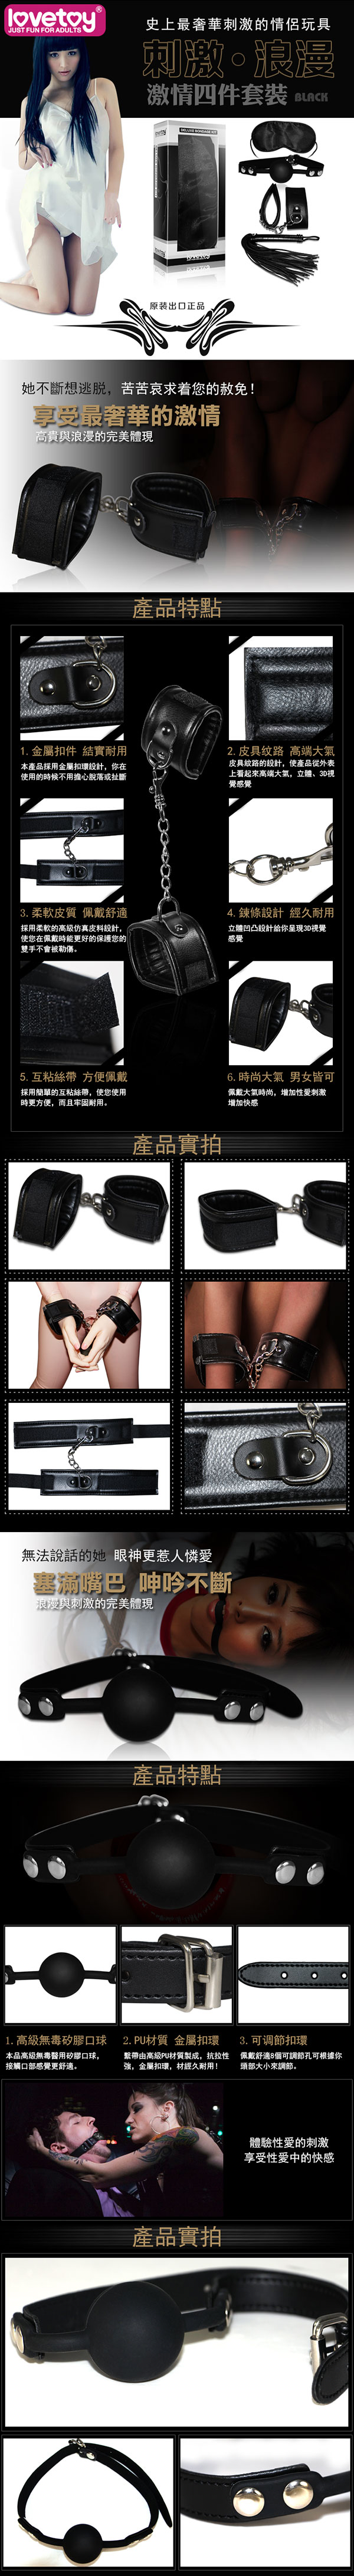 Lovetoy．黑色天使套裝8-SM超值禮盒組(口塞+皮鞭+眼罩+手銬)